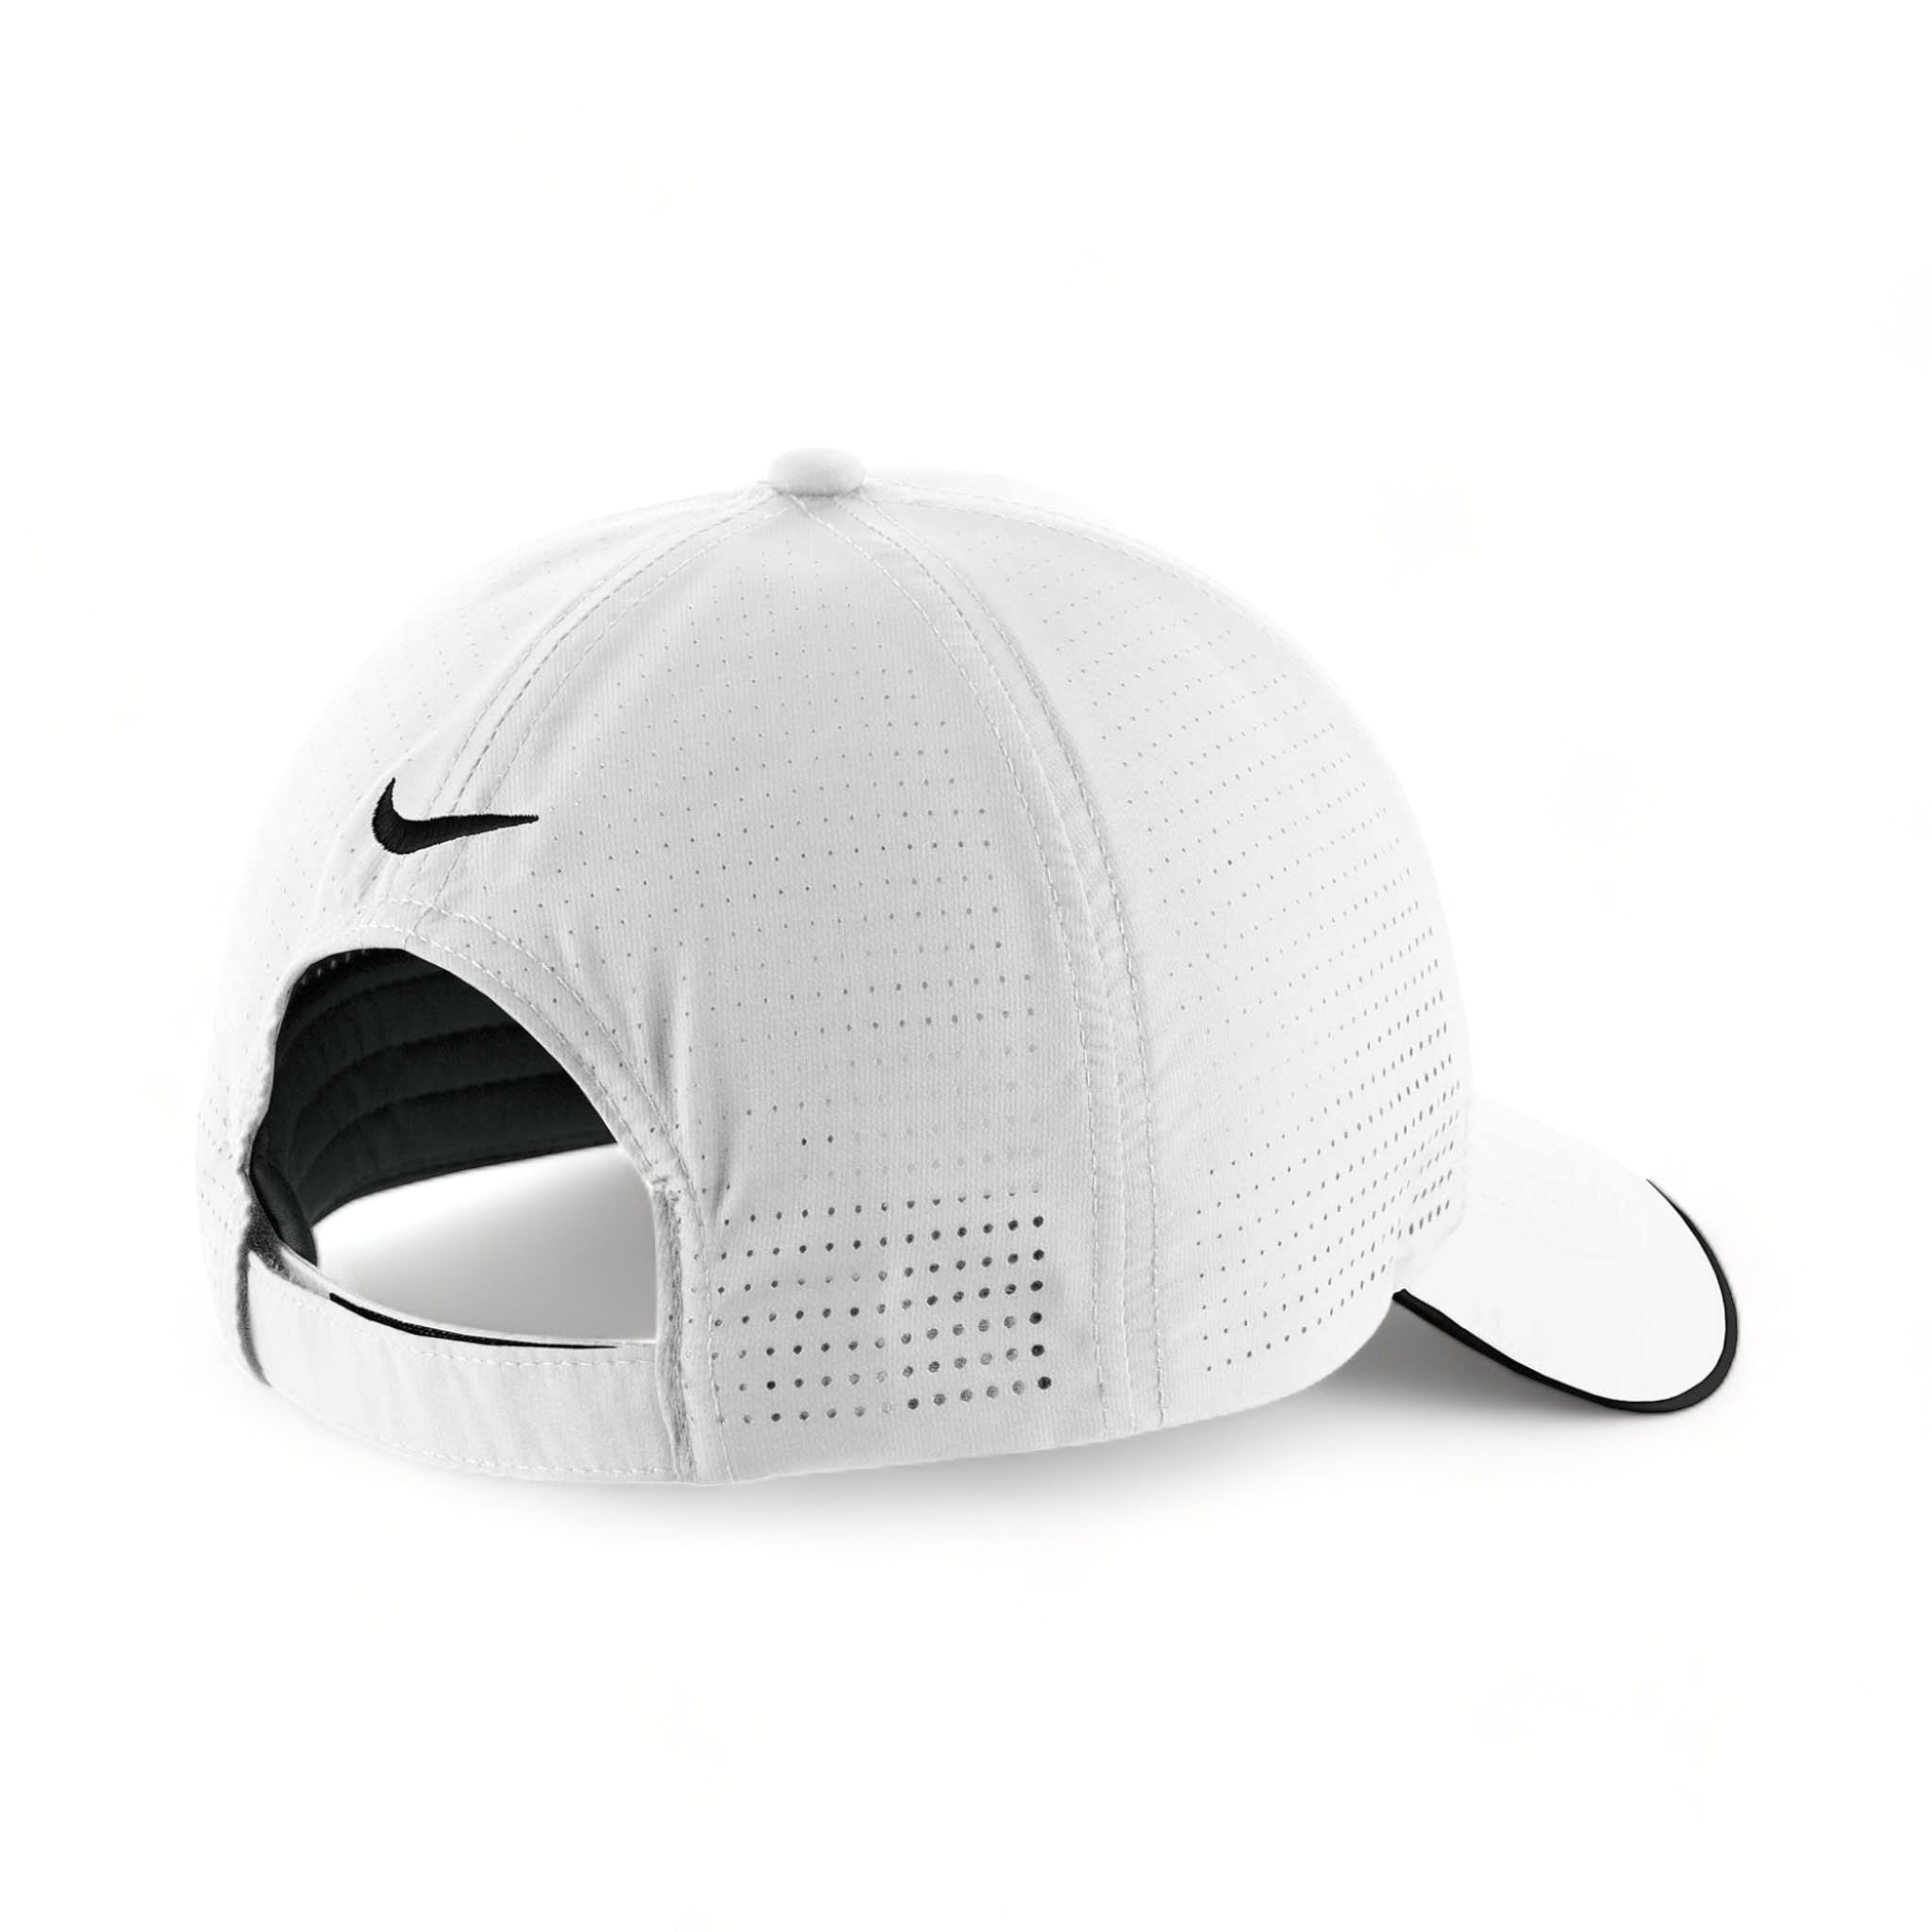 Back view of Nike NKFB6445 custom hat in white and black